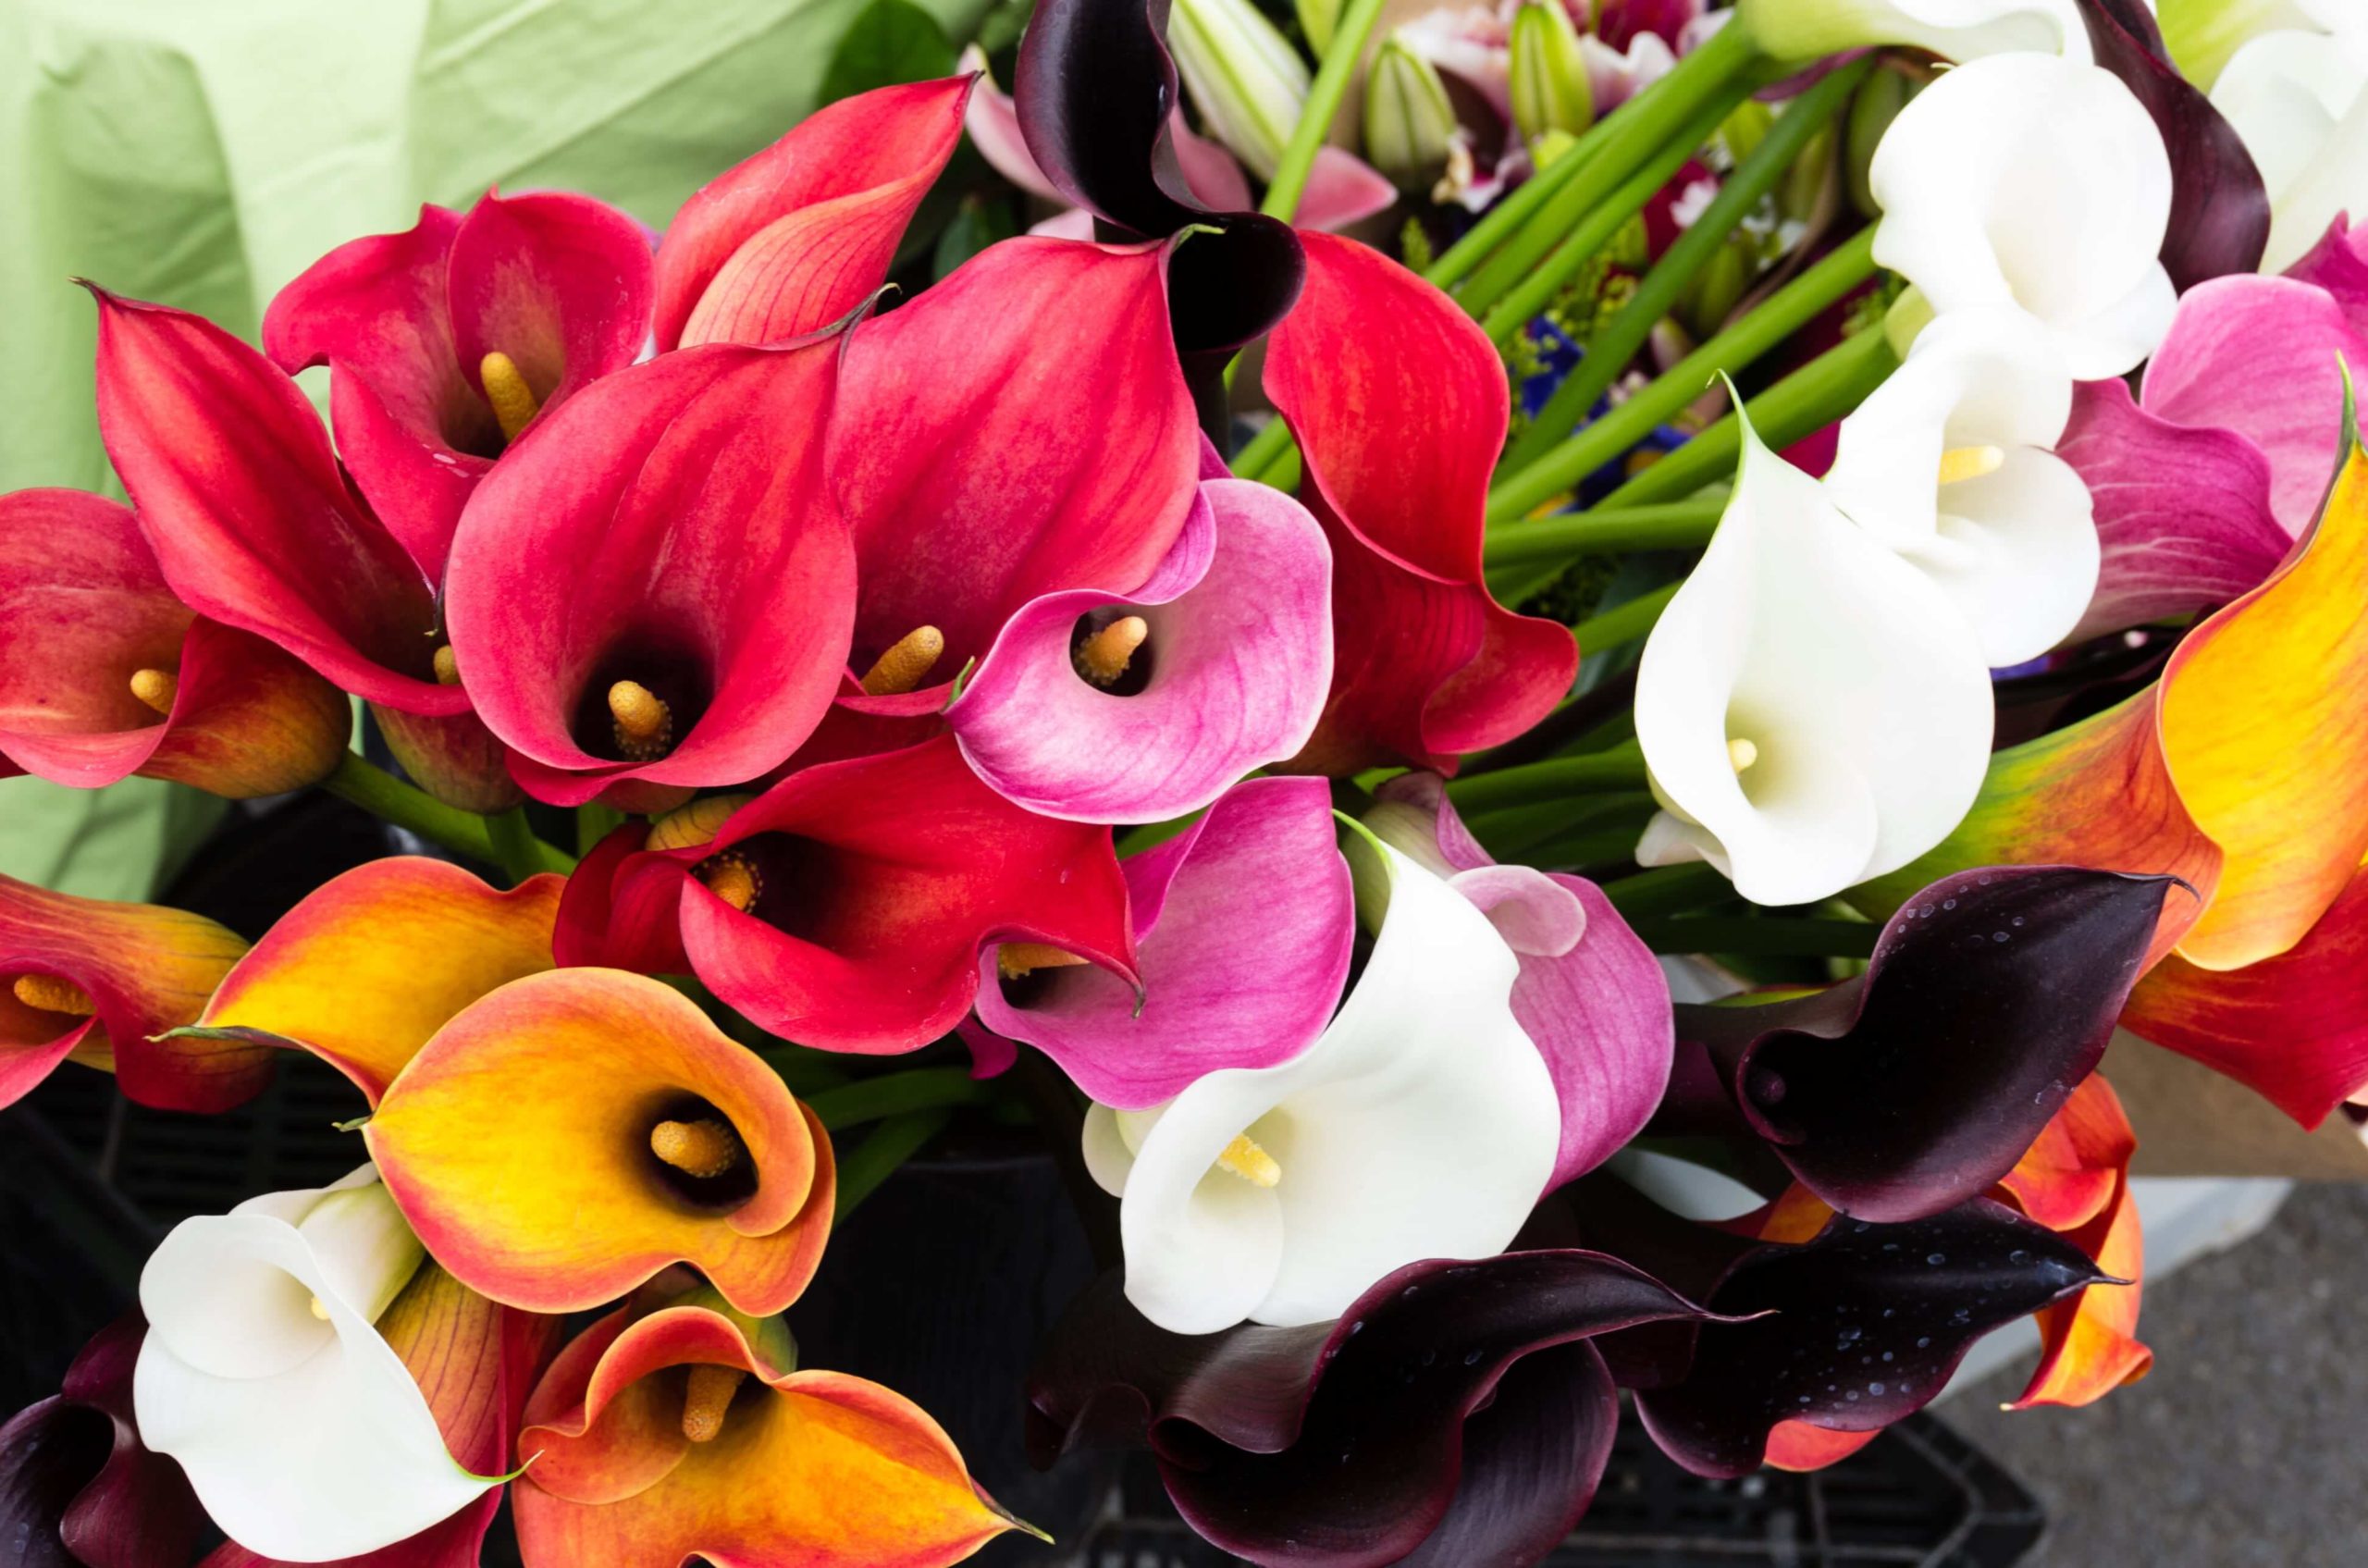 Colorful arrangement of calla lilies